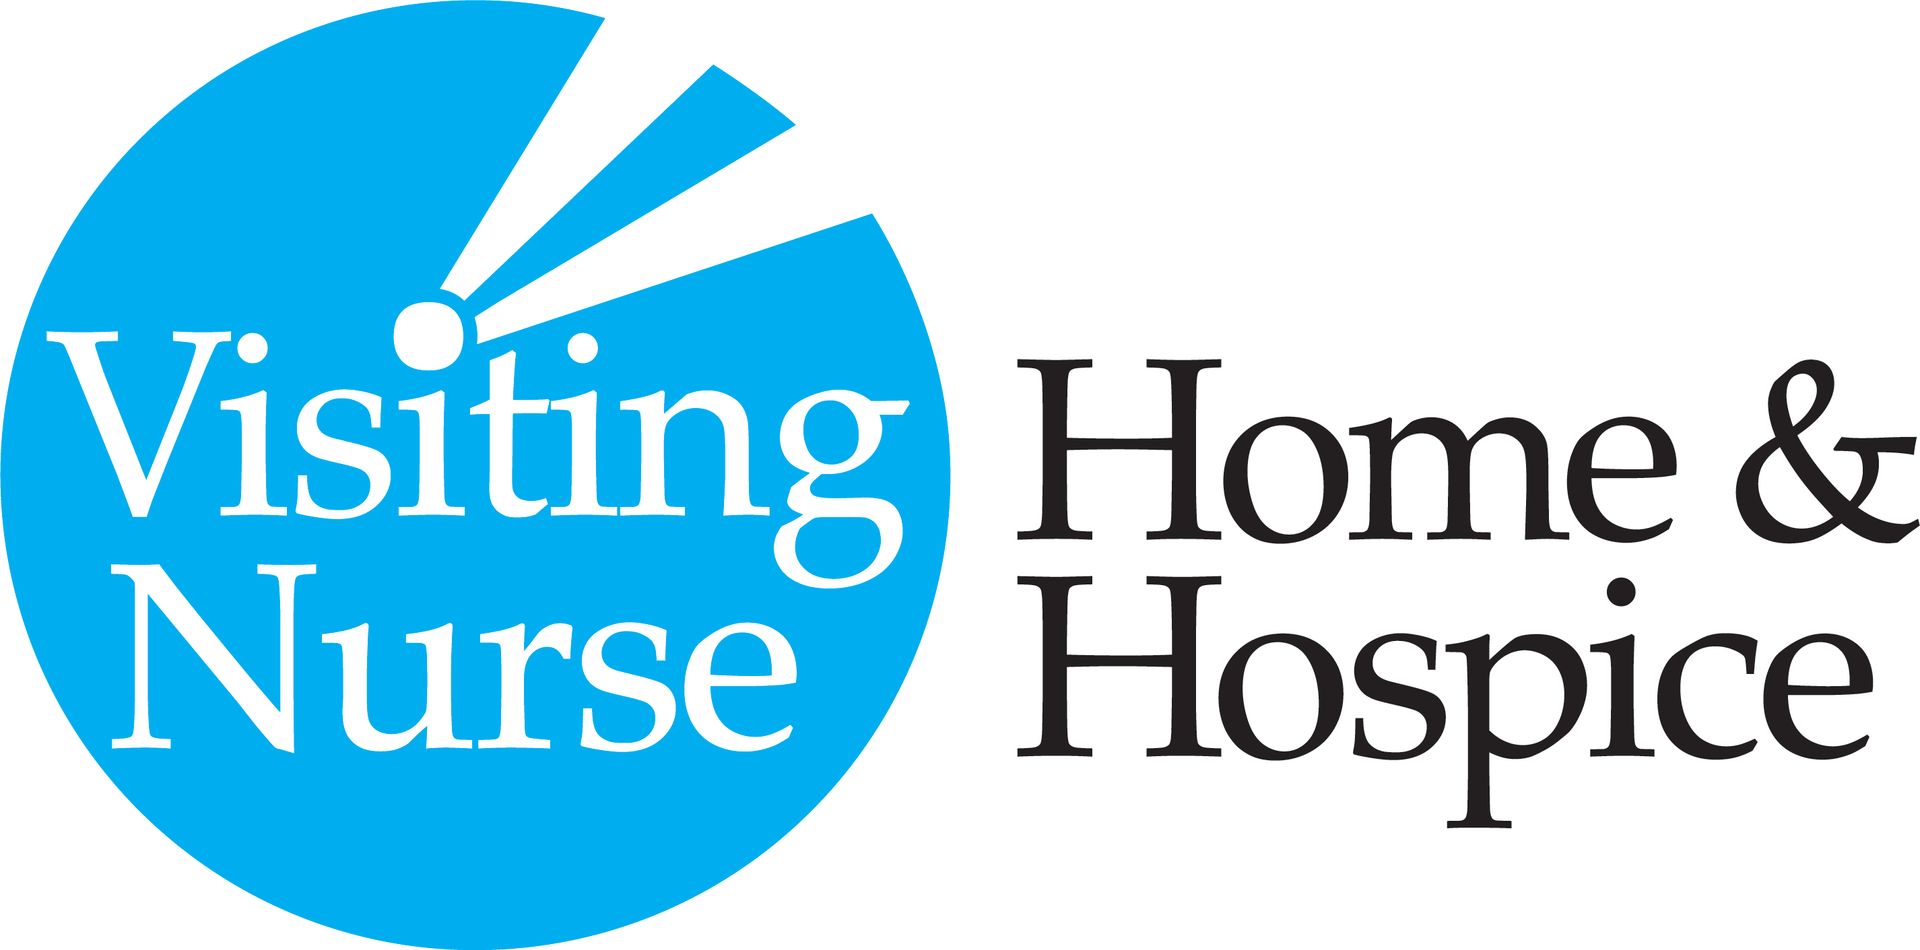 A blue logo for visiting home and hospice nurse